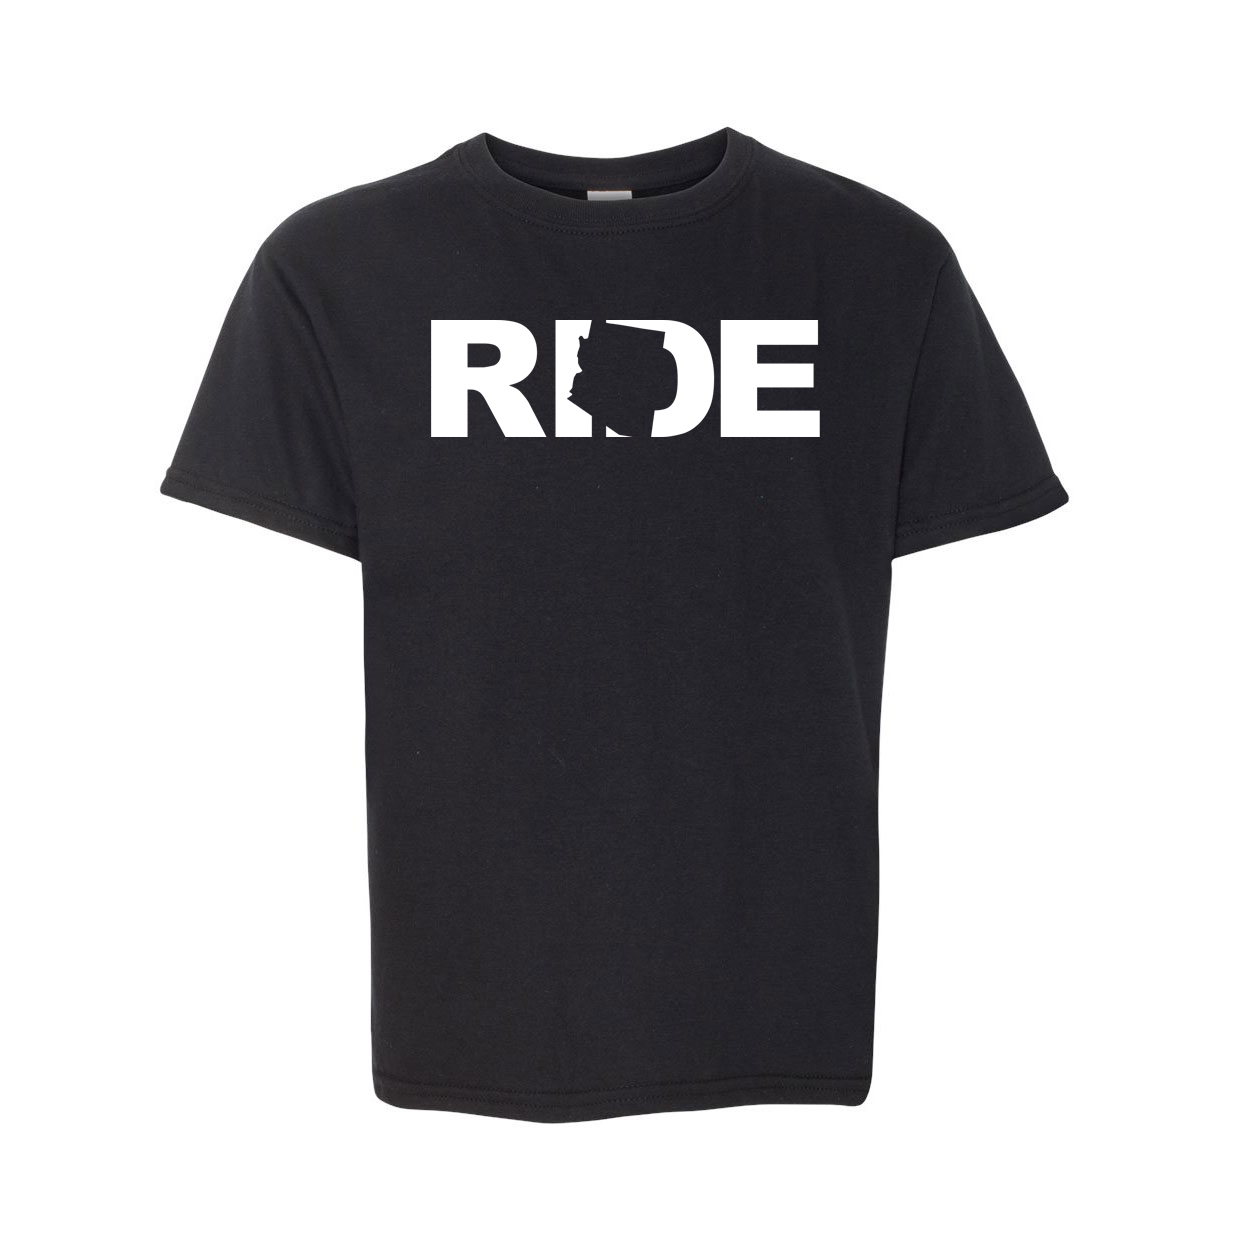 Ride Arizona Classic Youth T-Shirt Black (White Logo)